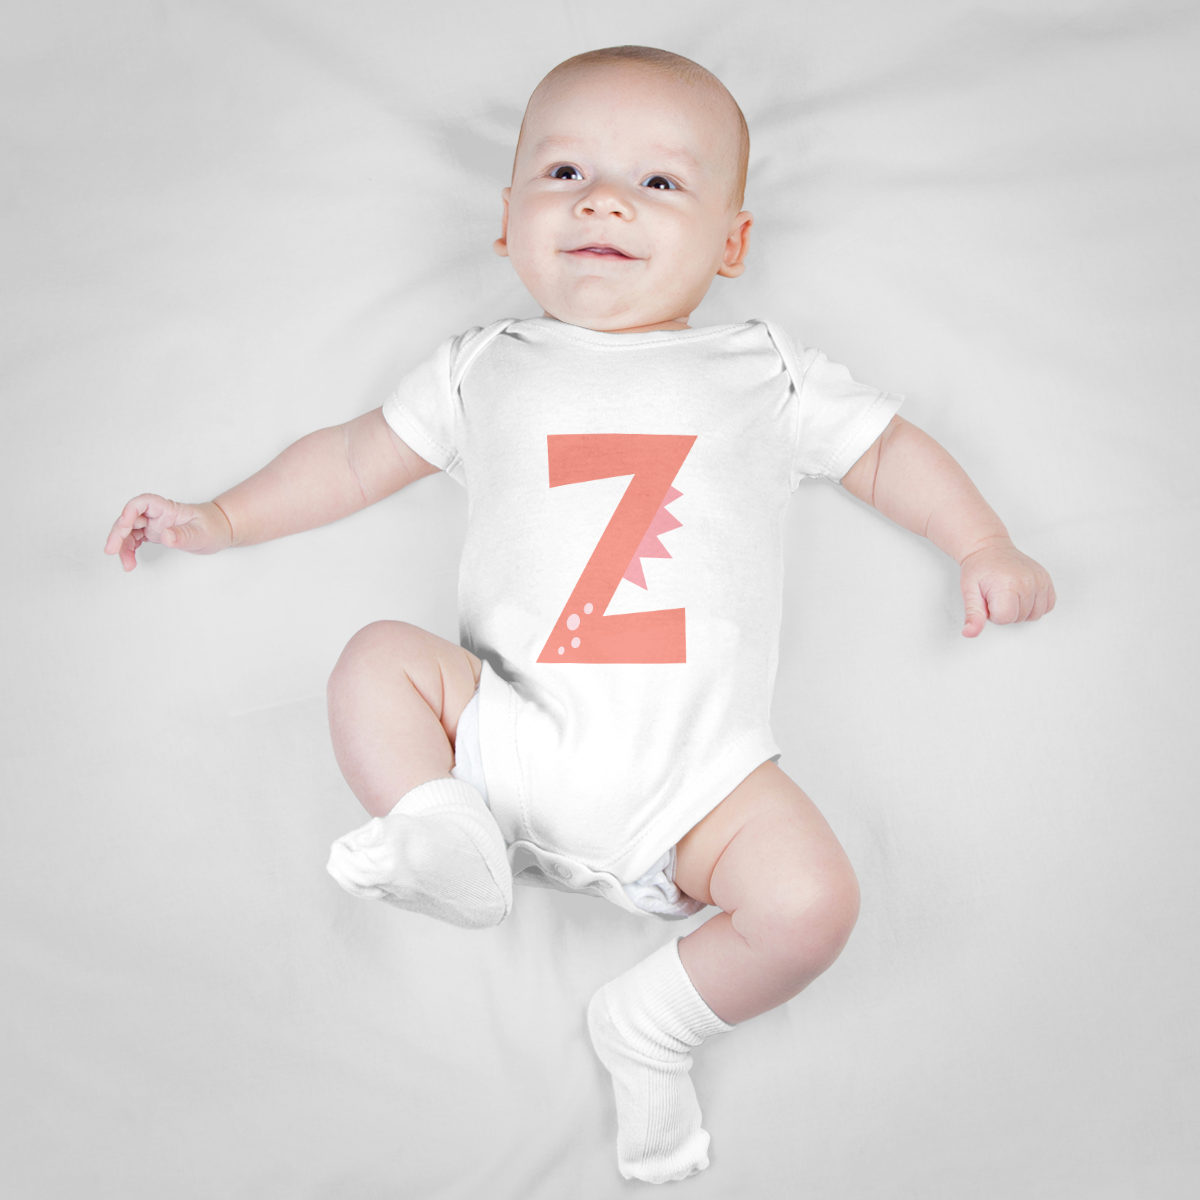 Baby Romper (Letter Z)